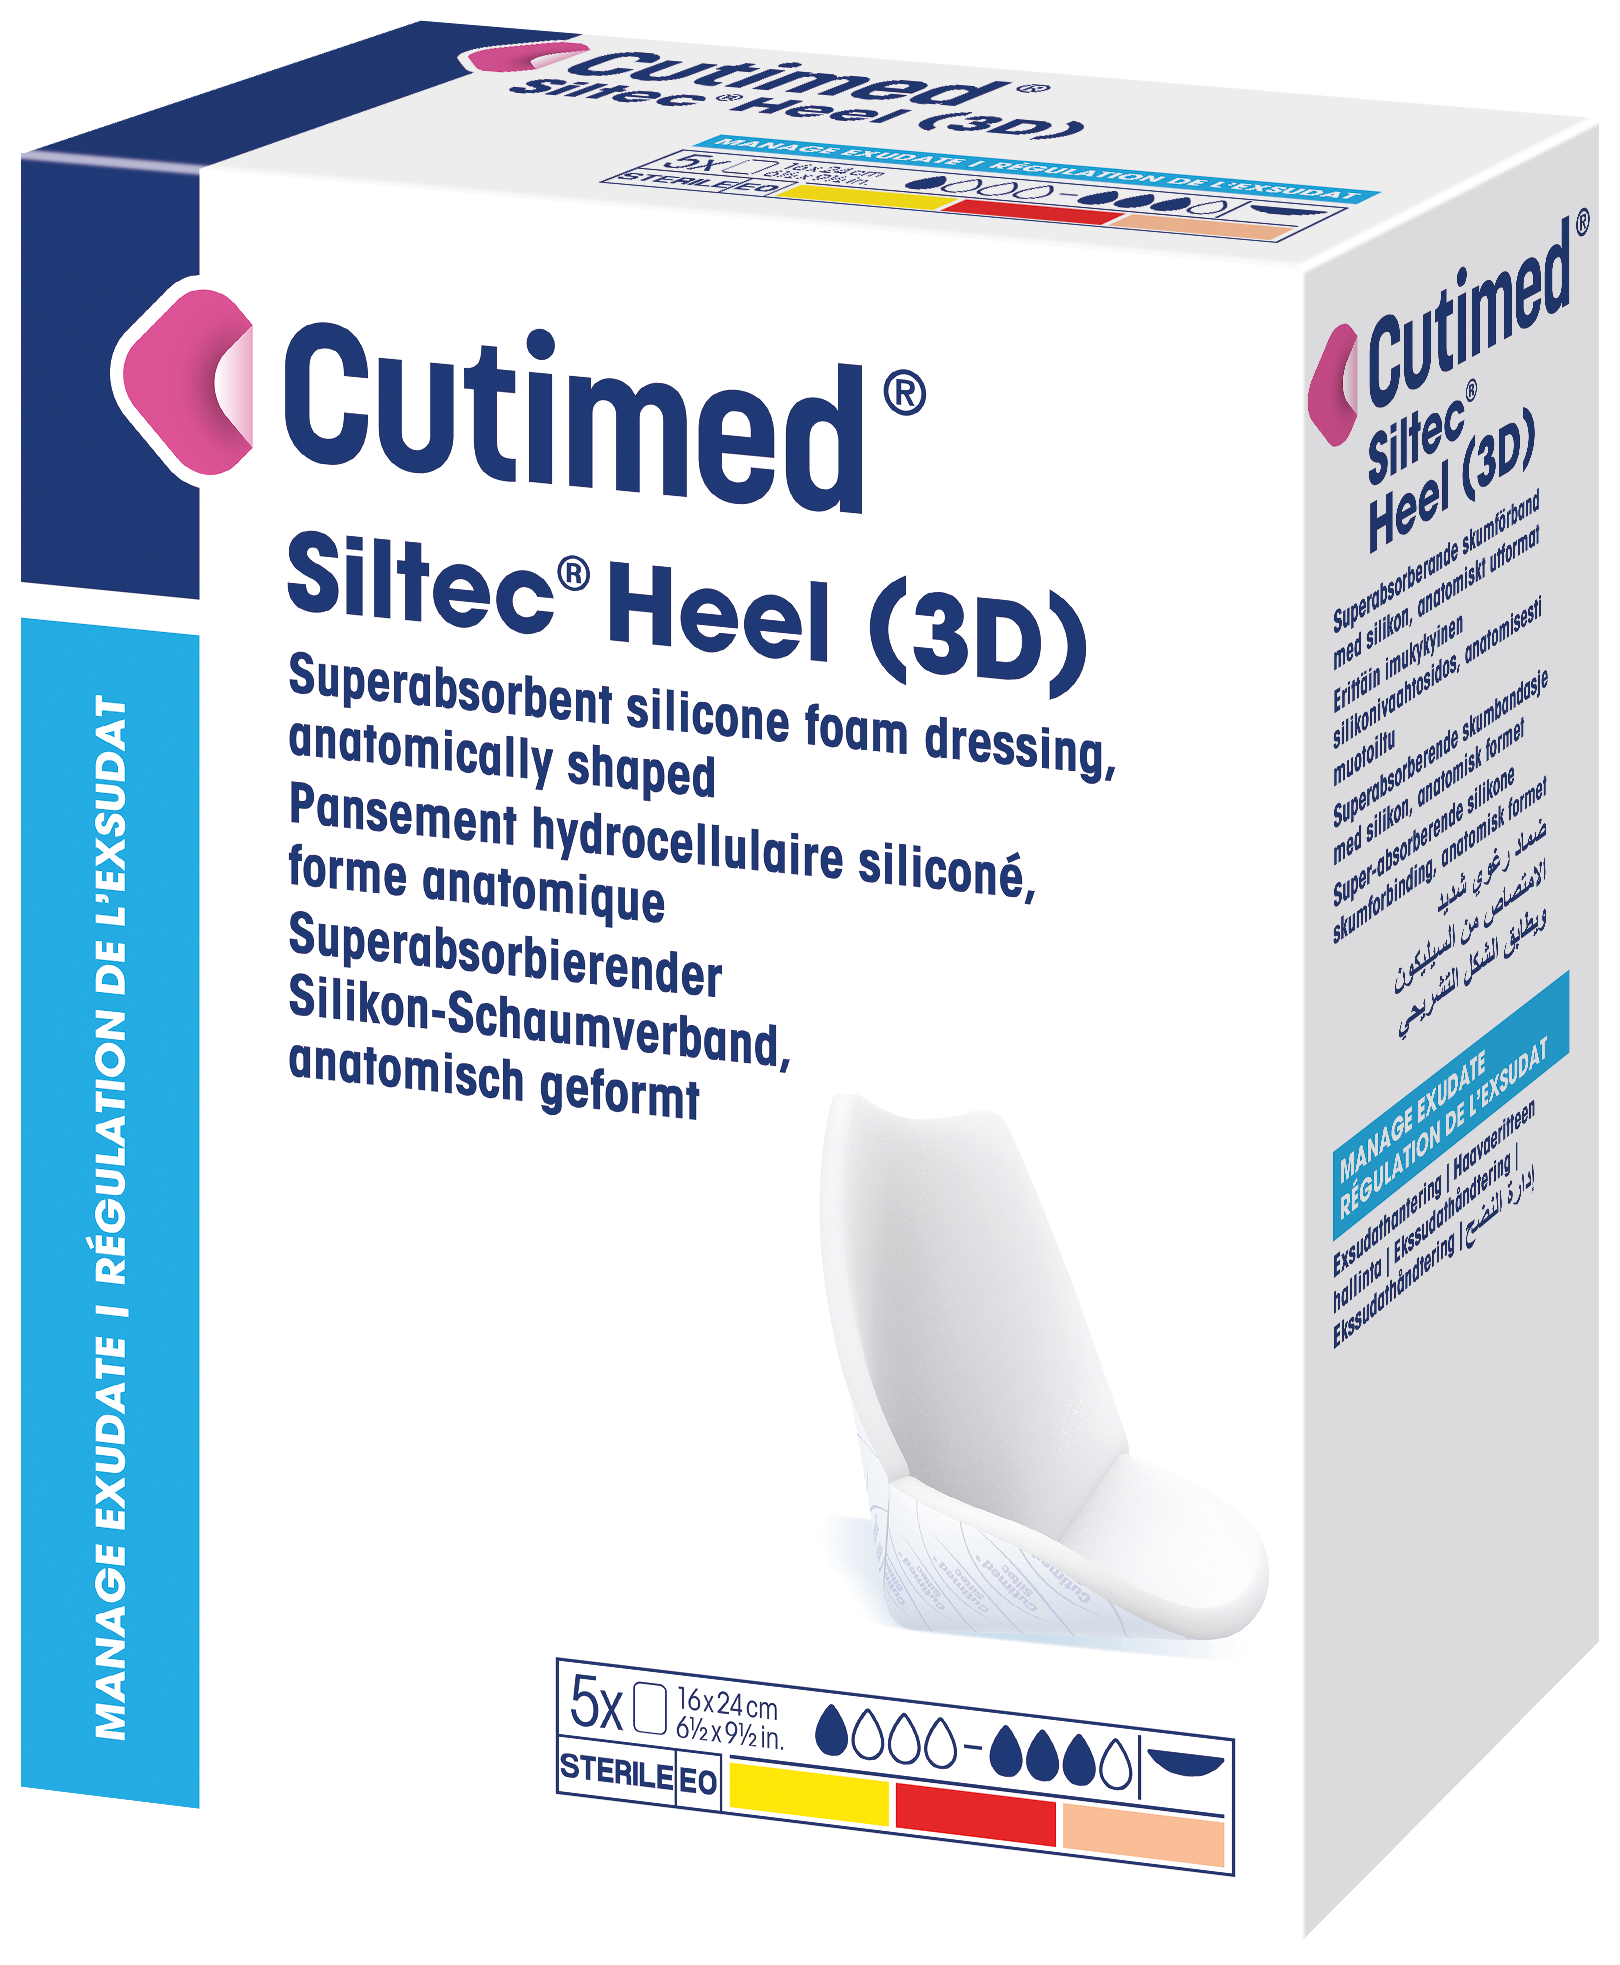 Cutimed® Siltec® Heel 3D